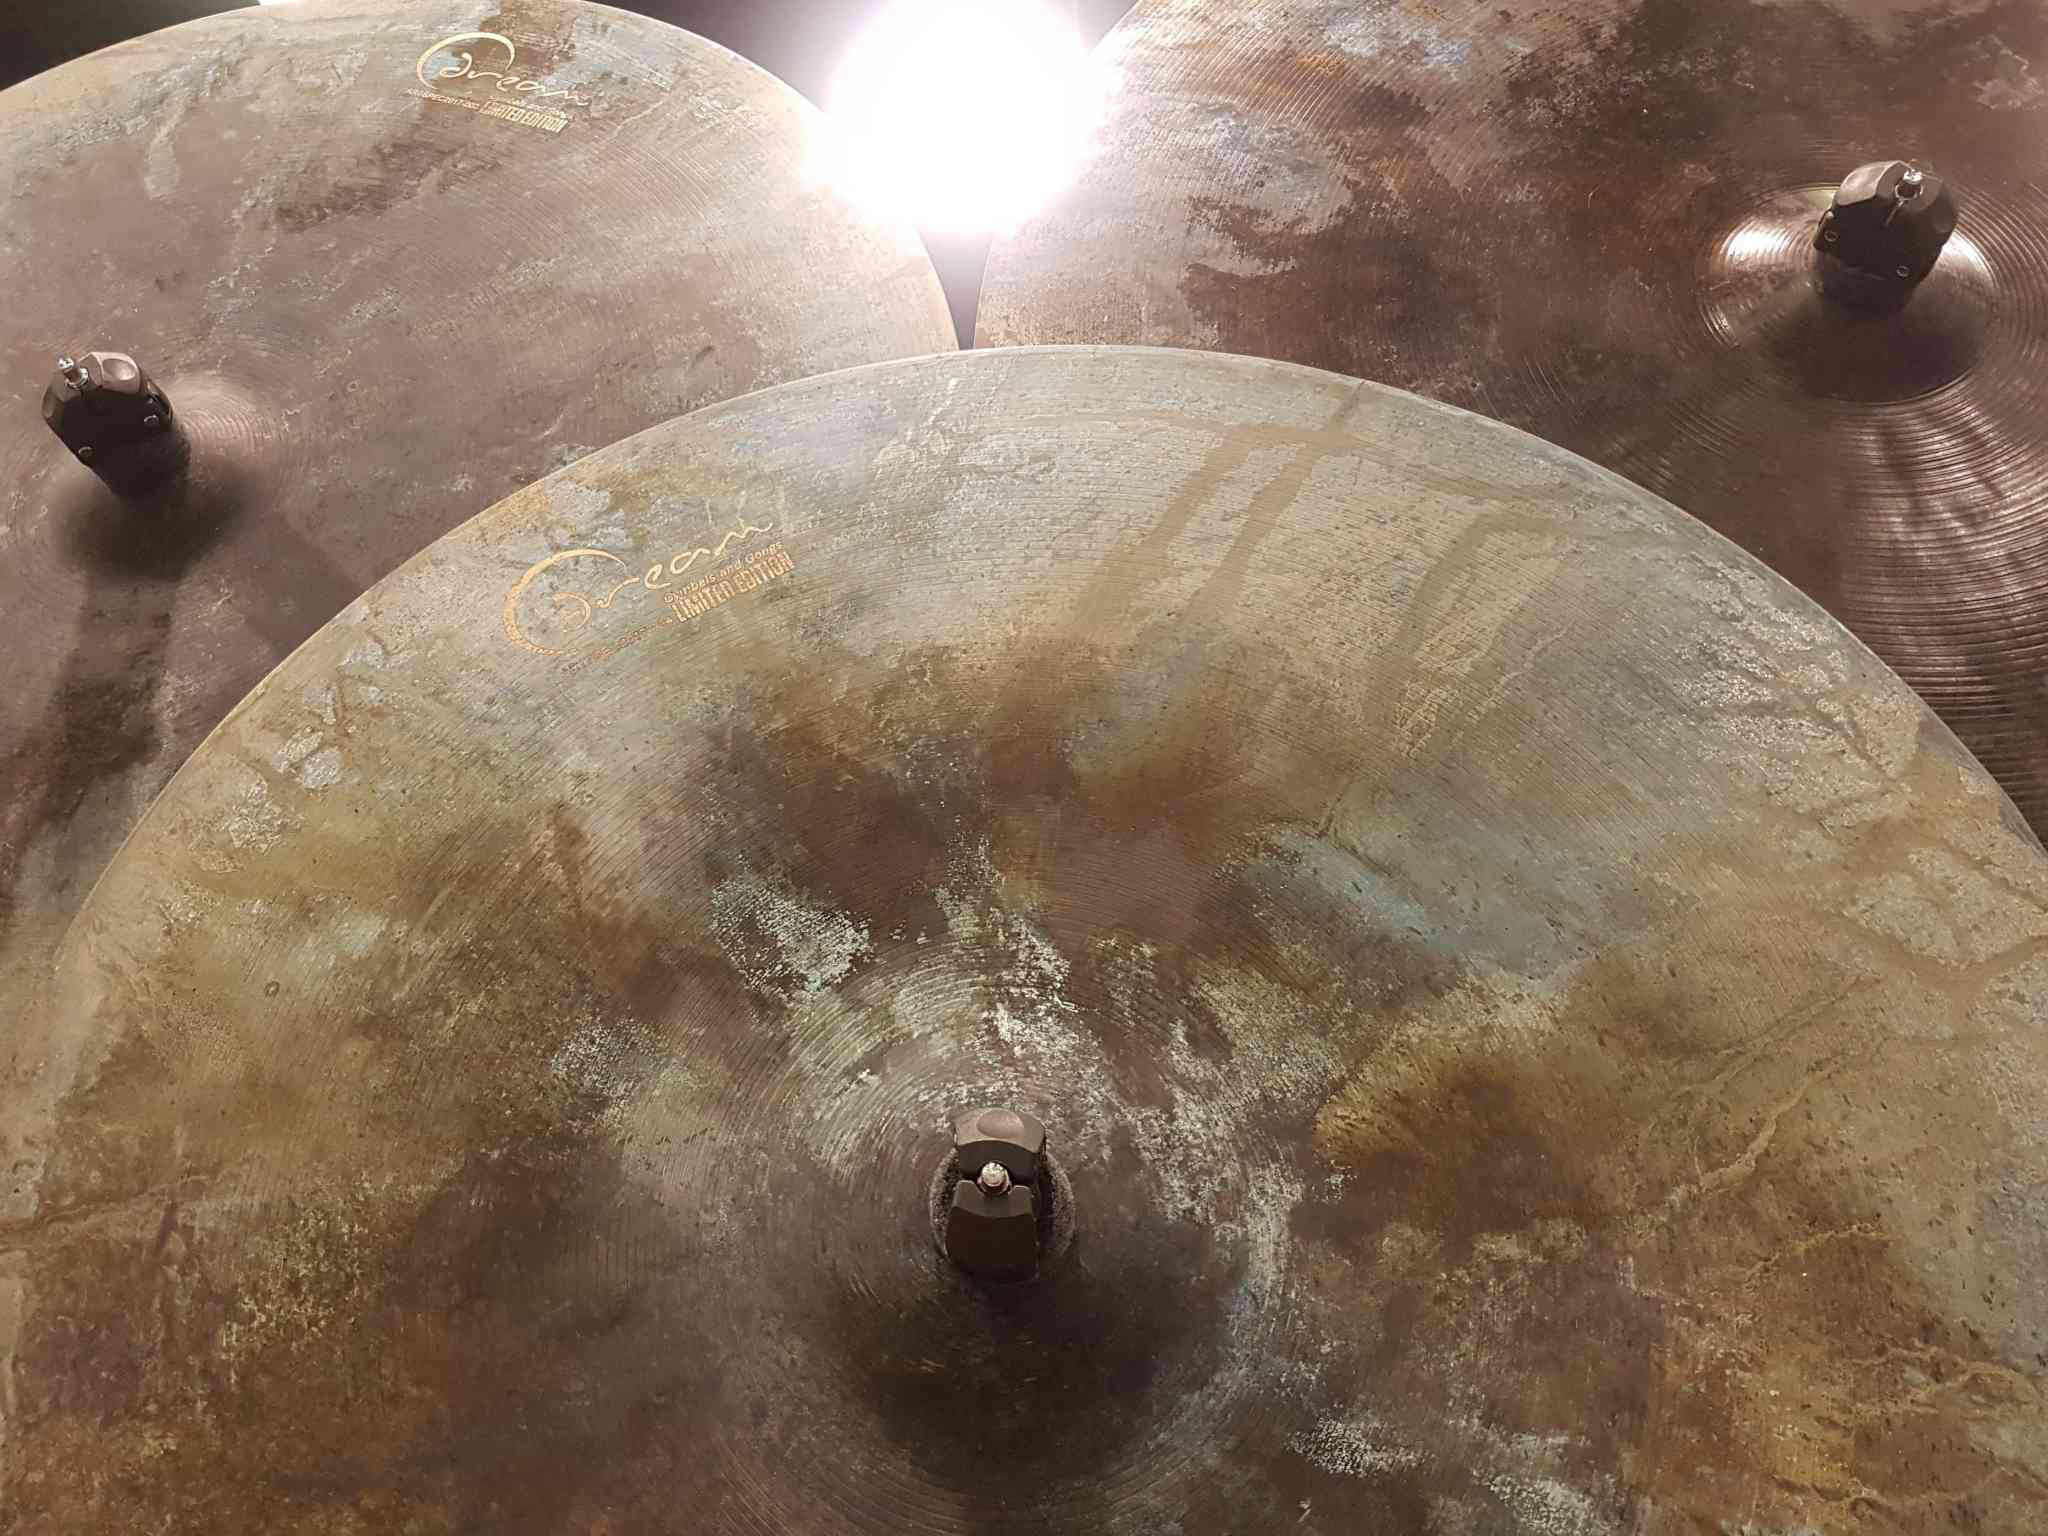 Dream Cymbals – Ny agentur hos Fitzpatrick i Skandinavien